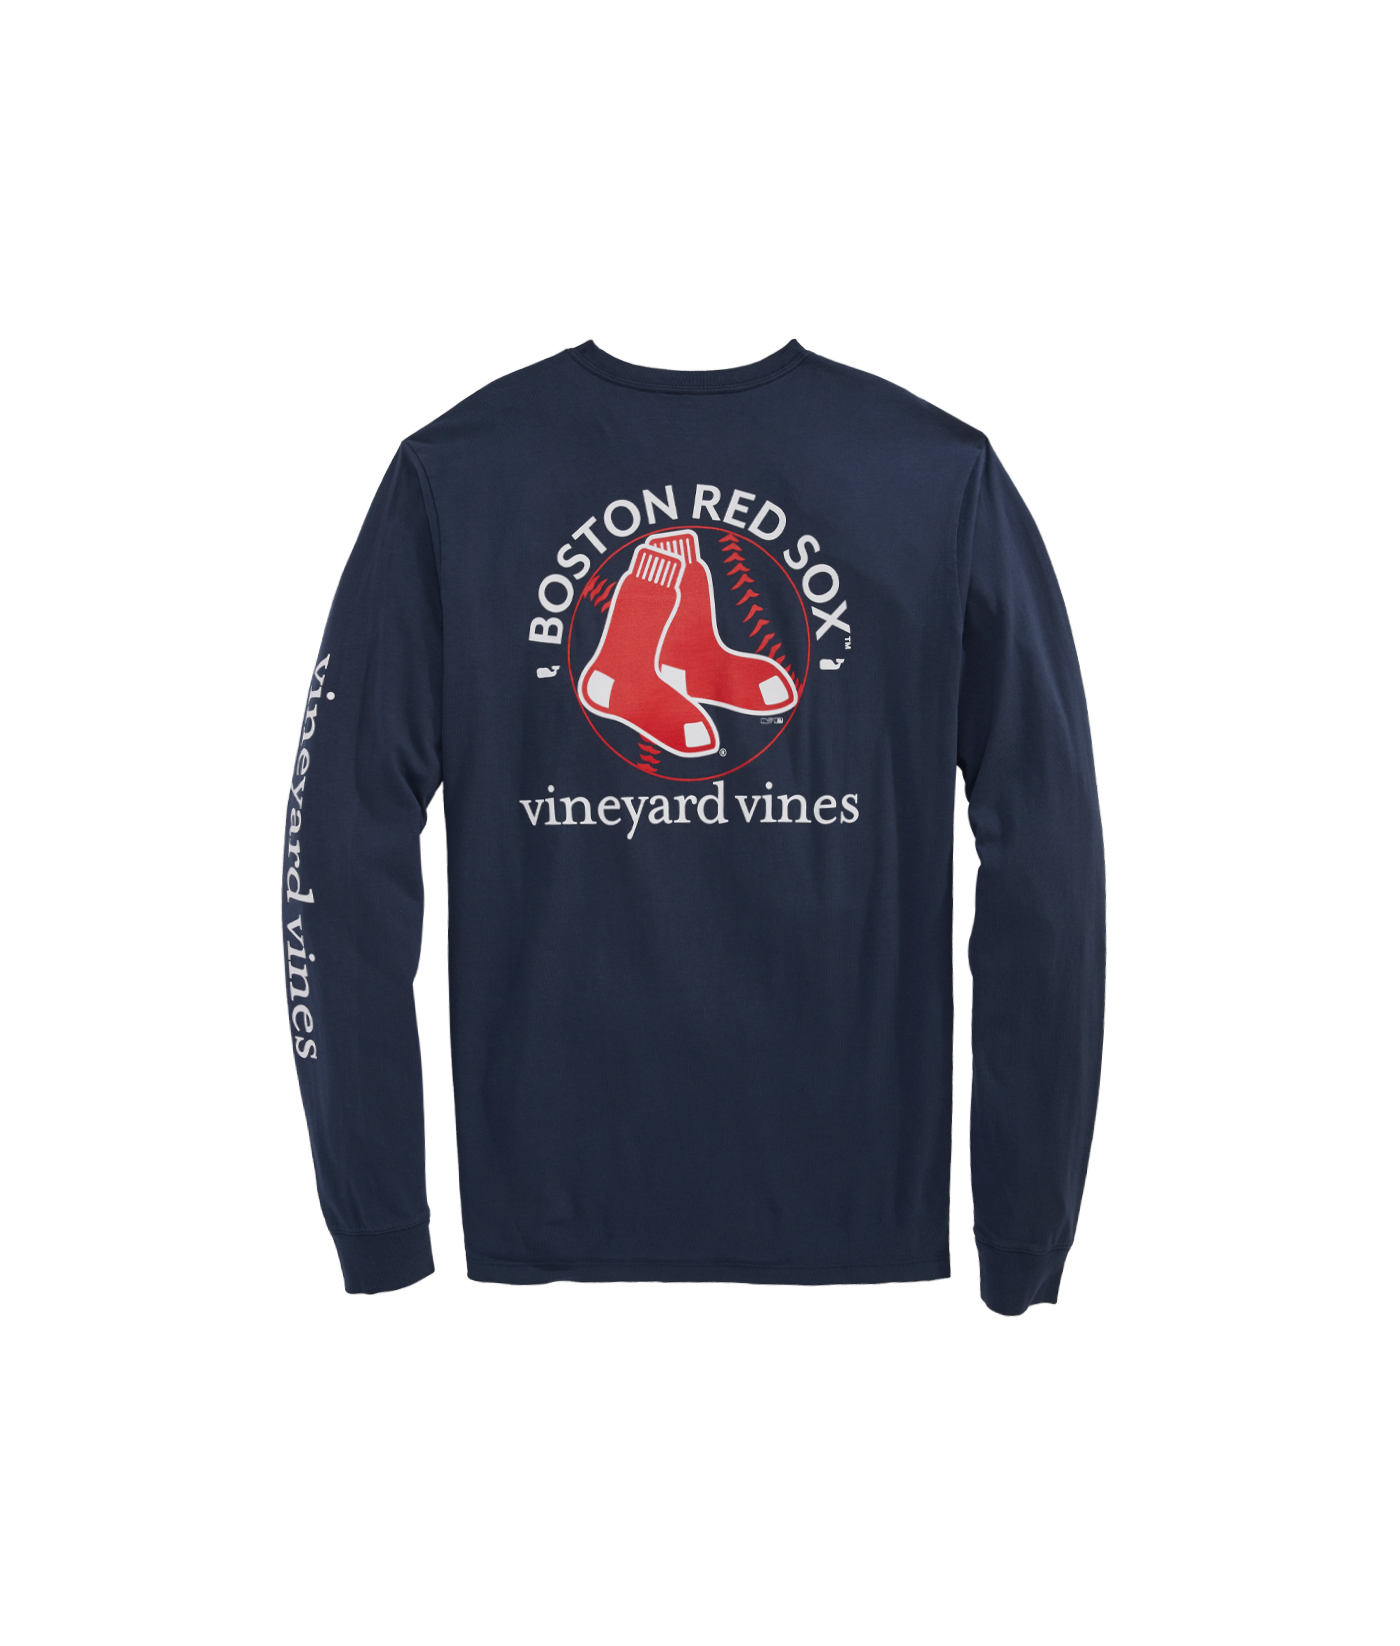 vineyard vines red sox shirt